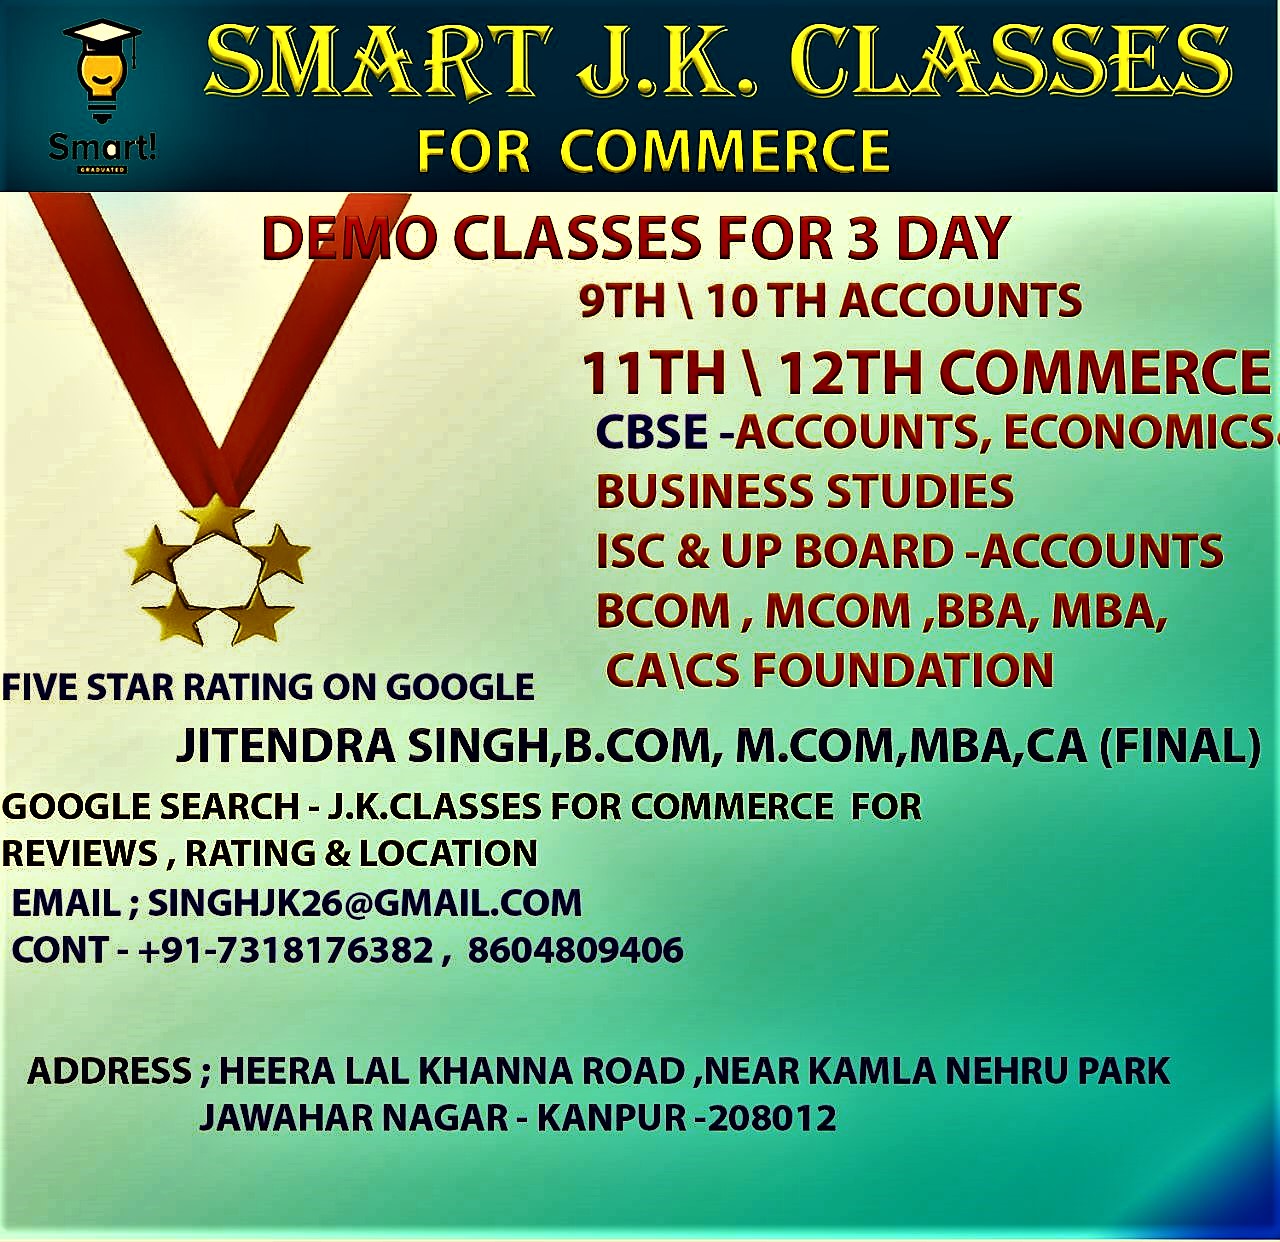 24097SMART JK CLASSES for COMMERCE
Class 11th – Business Studies